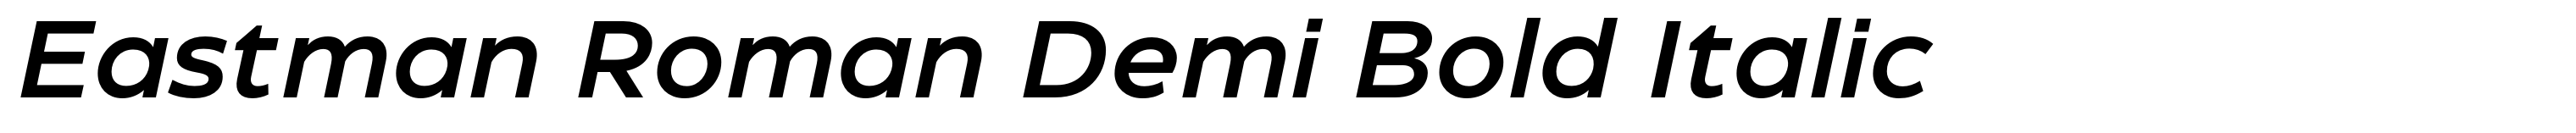 Eastman Roman Demi Bold Italic